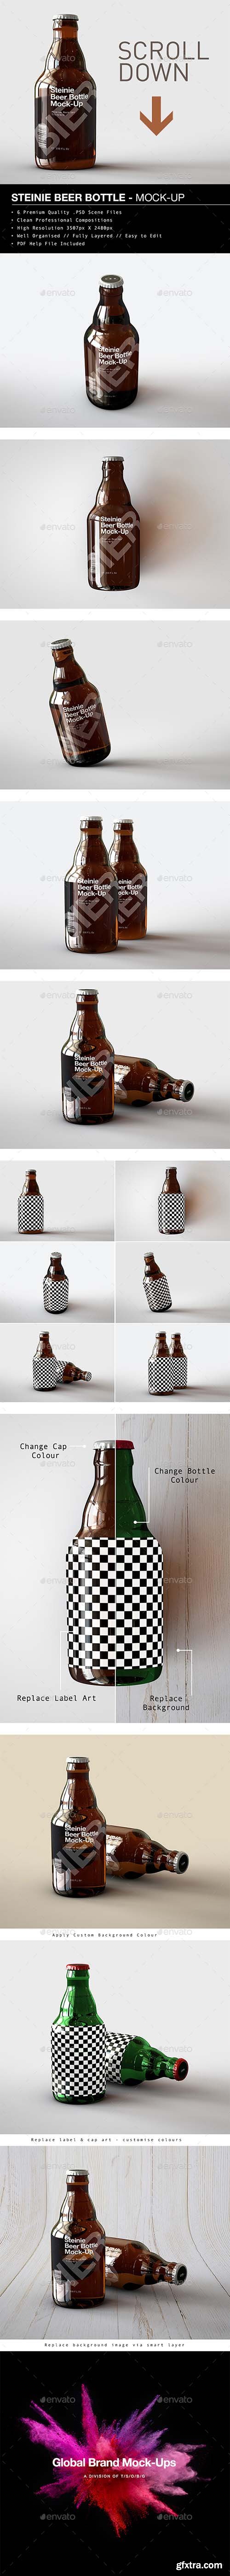 GR - Beer Bottle Mock-Up | Steinie Edition 21402018